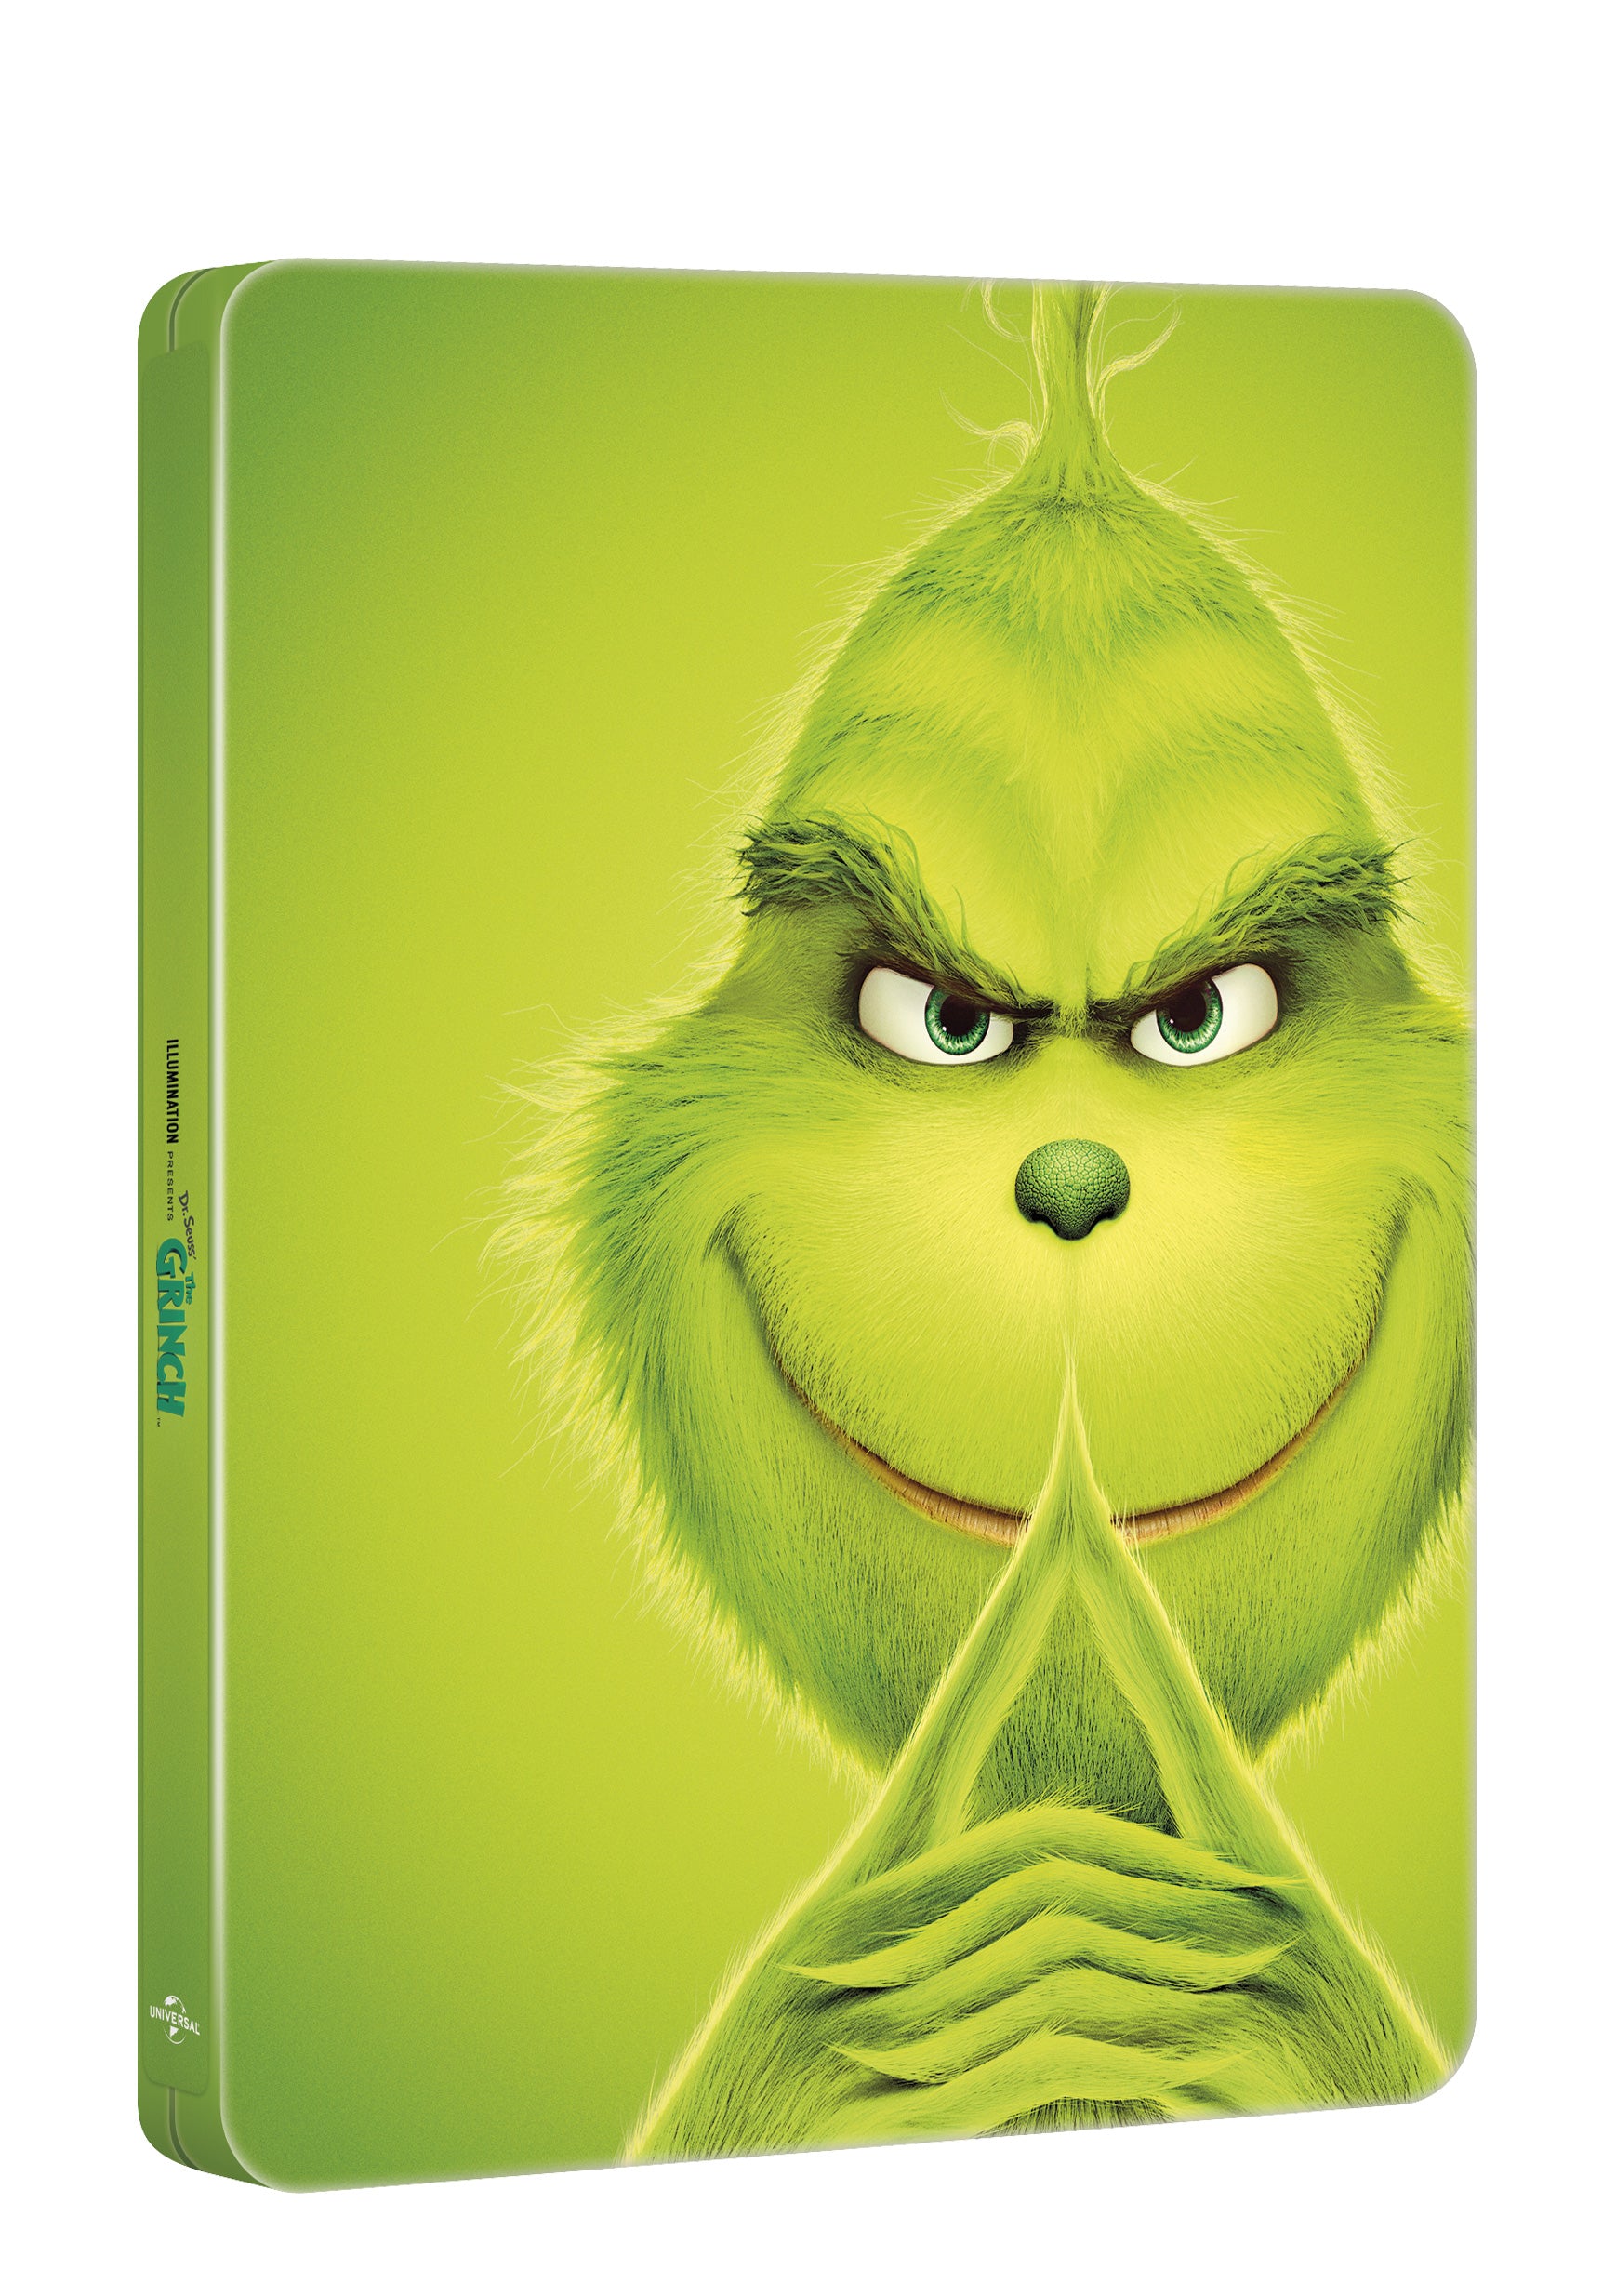 Grinch BD - steelbook / Dr. Seuss' The Grinch - Czech version